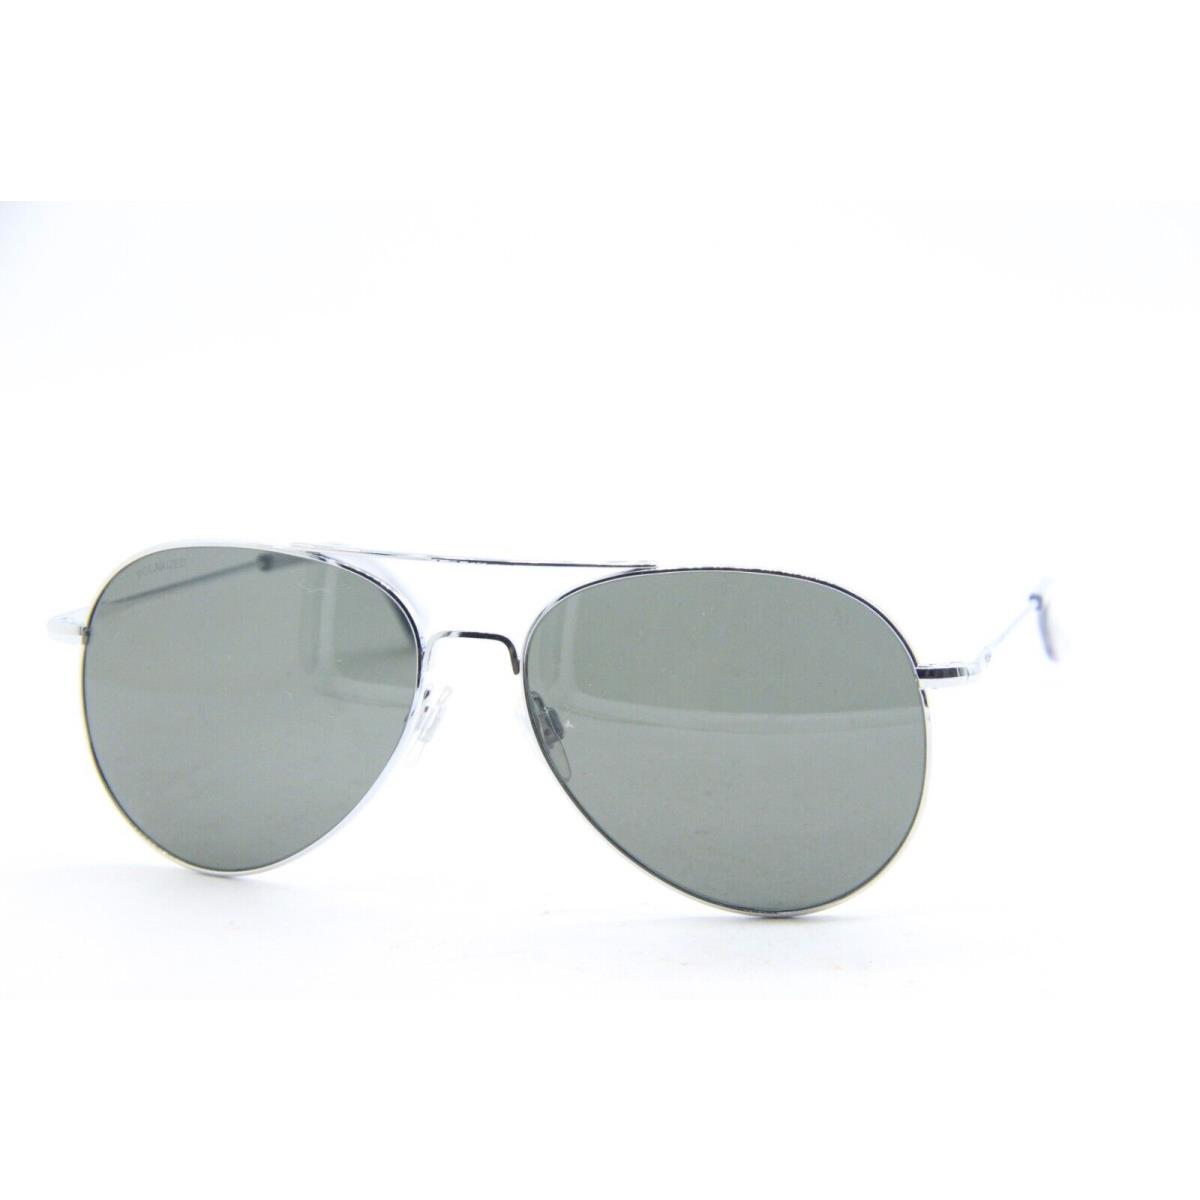 American Optical General Silver Polarized Sunglasses 58-14